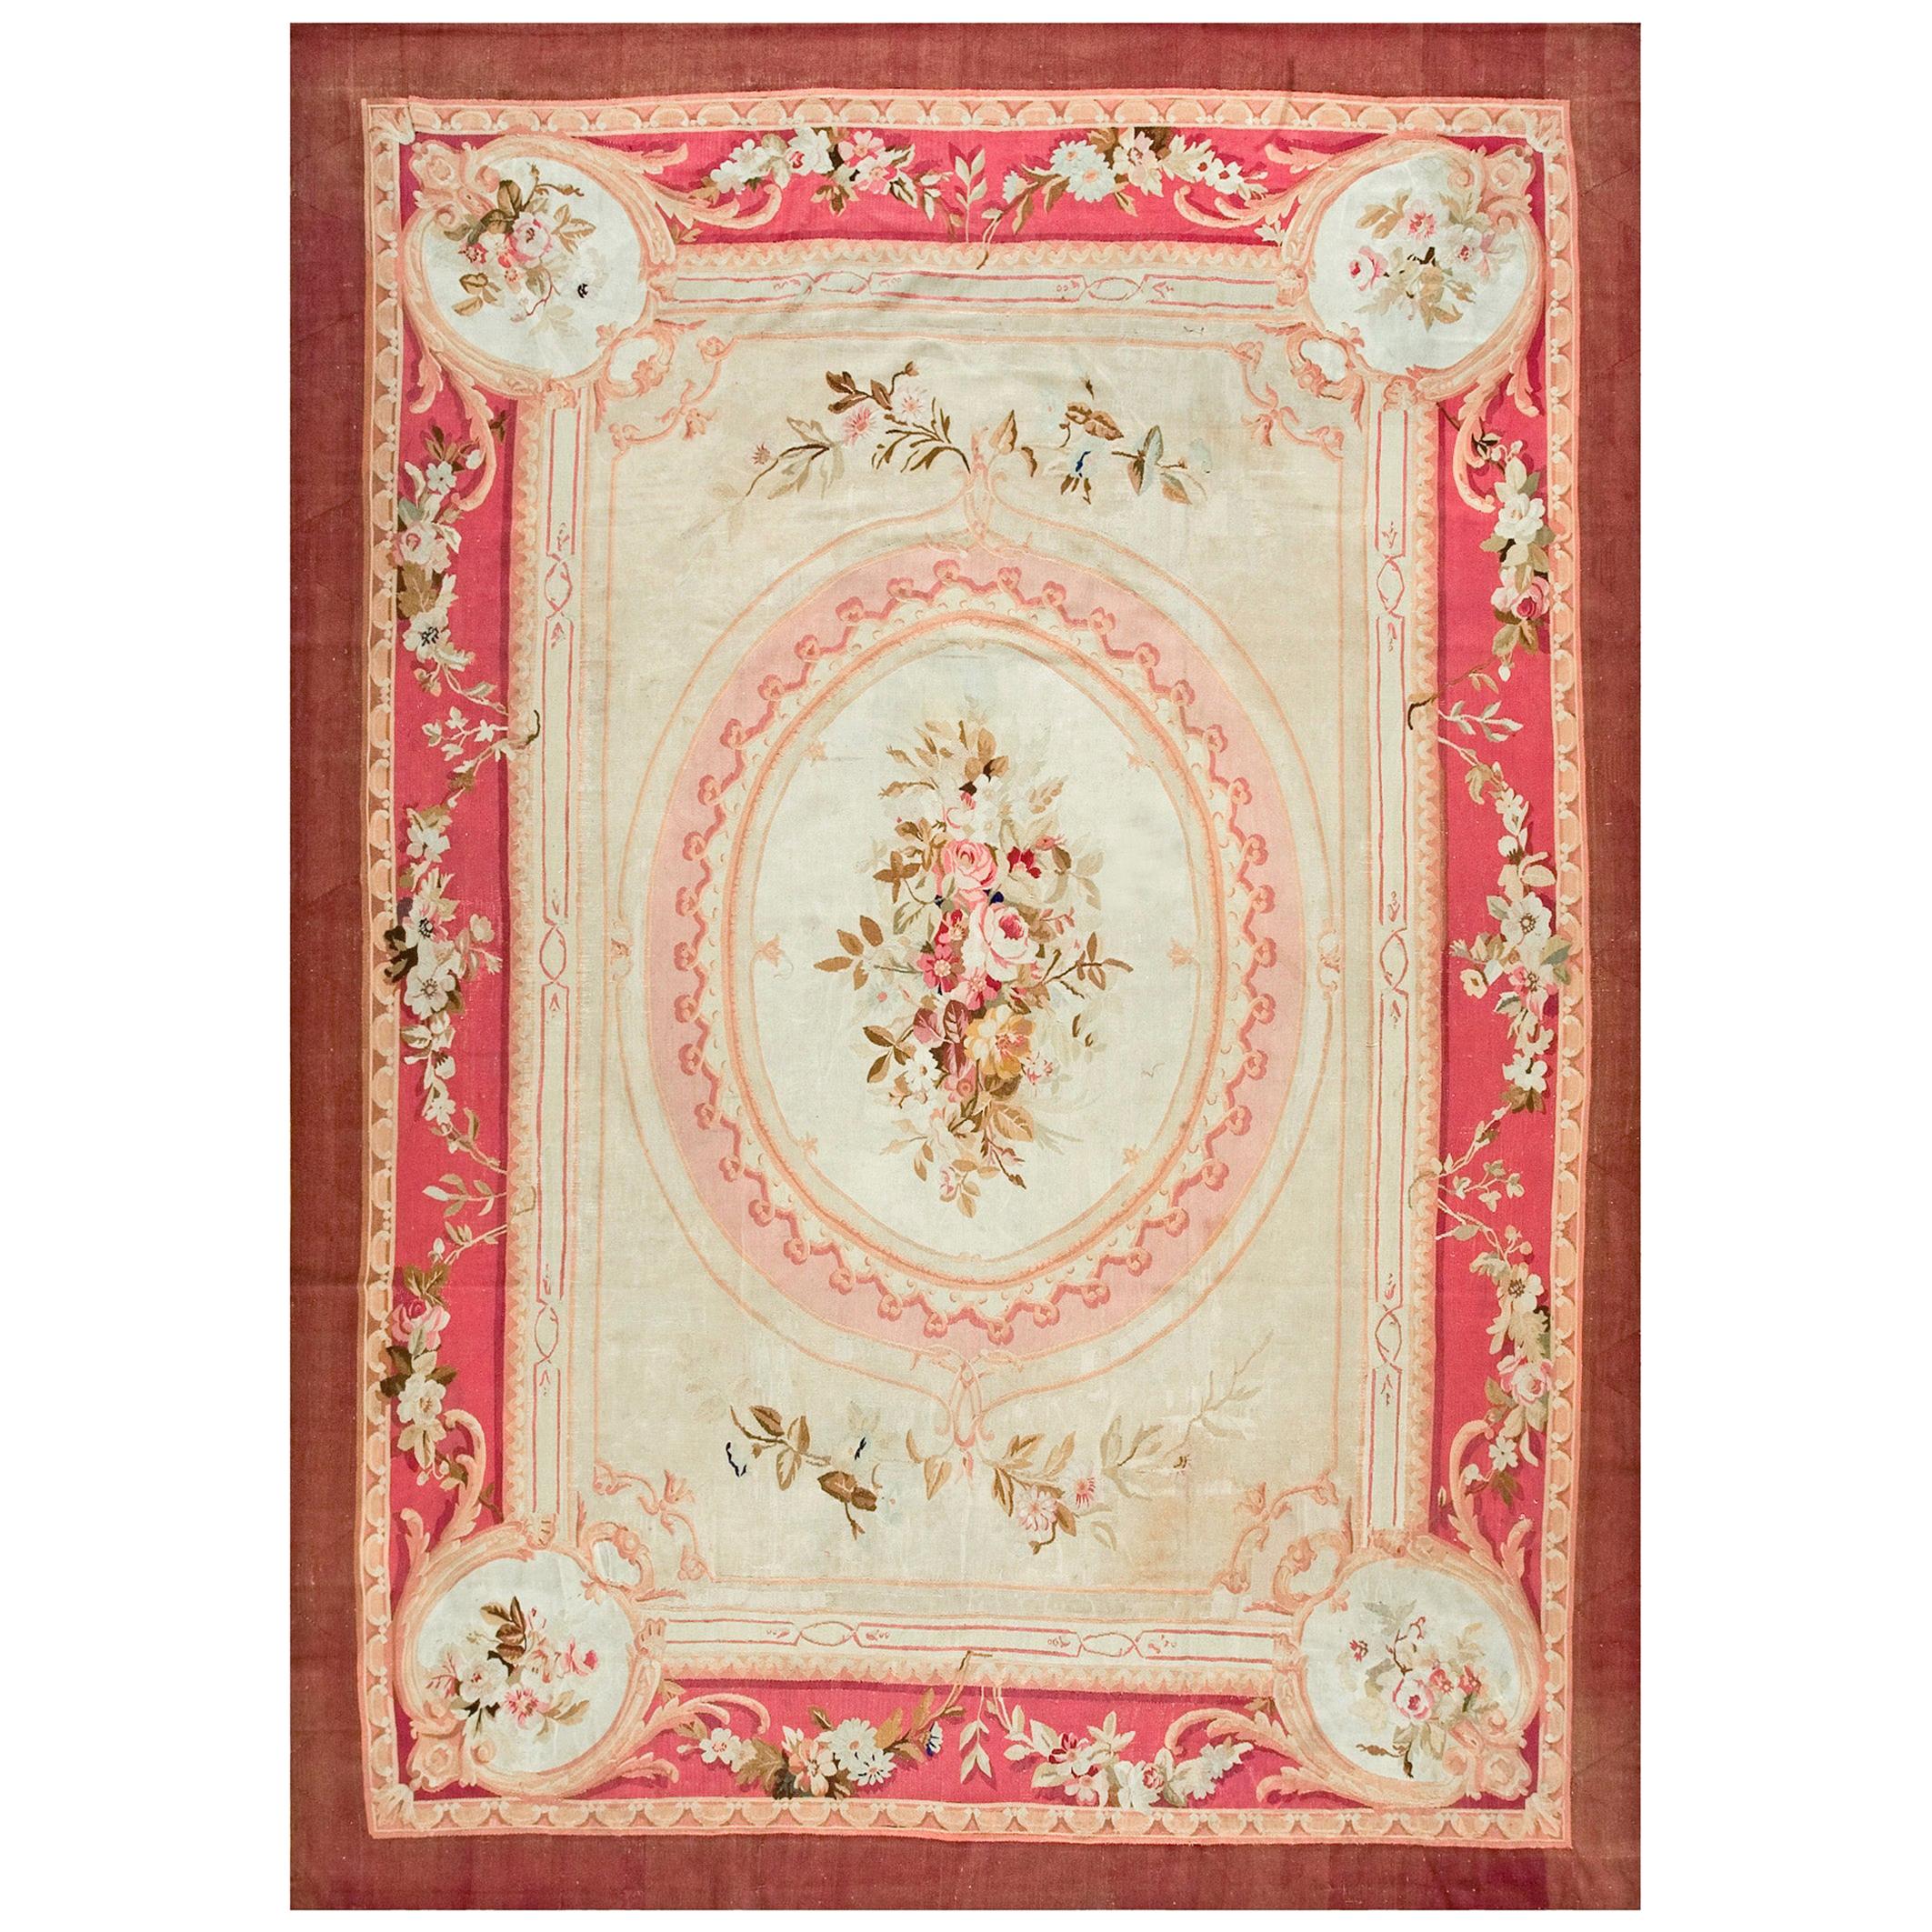 Late 19th Century French Aubusson Carpet ( 9'3" x 13' - 282 x 396 cm )